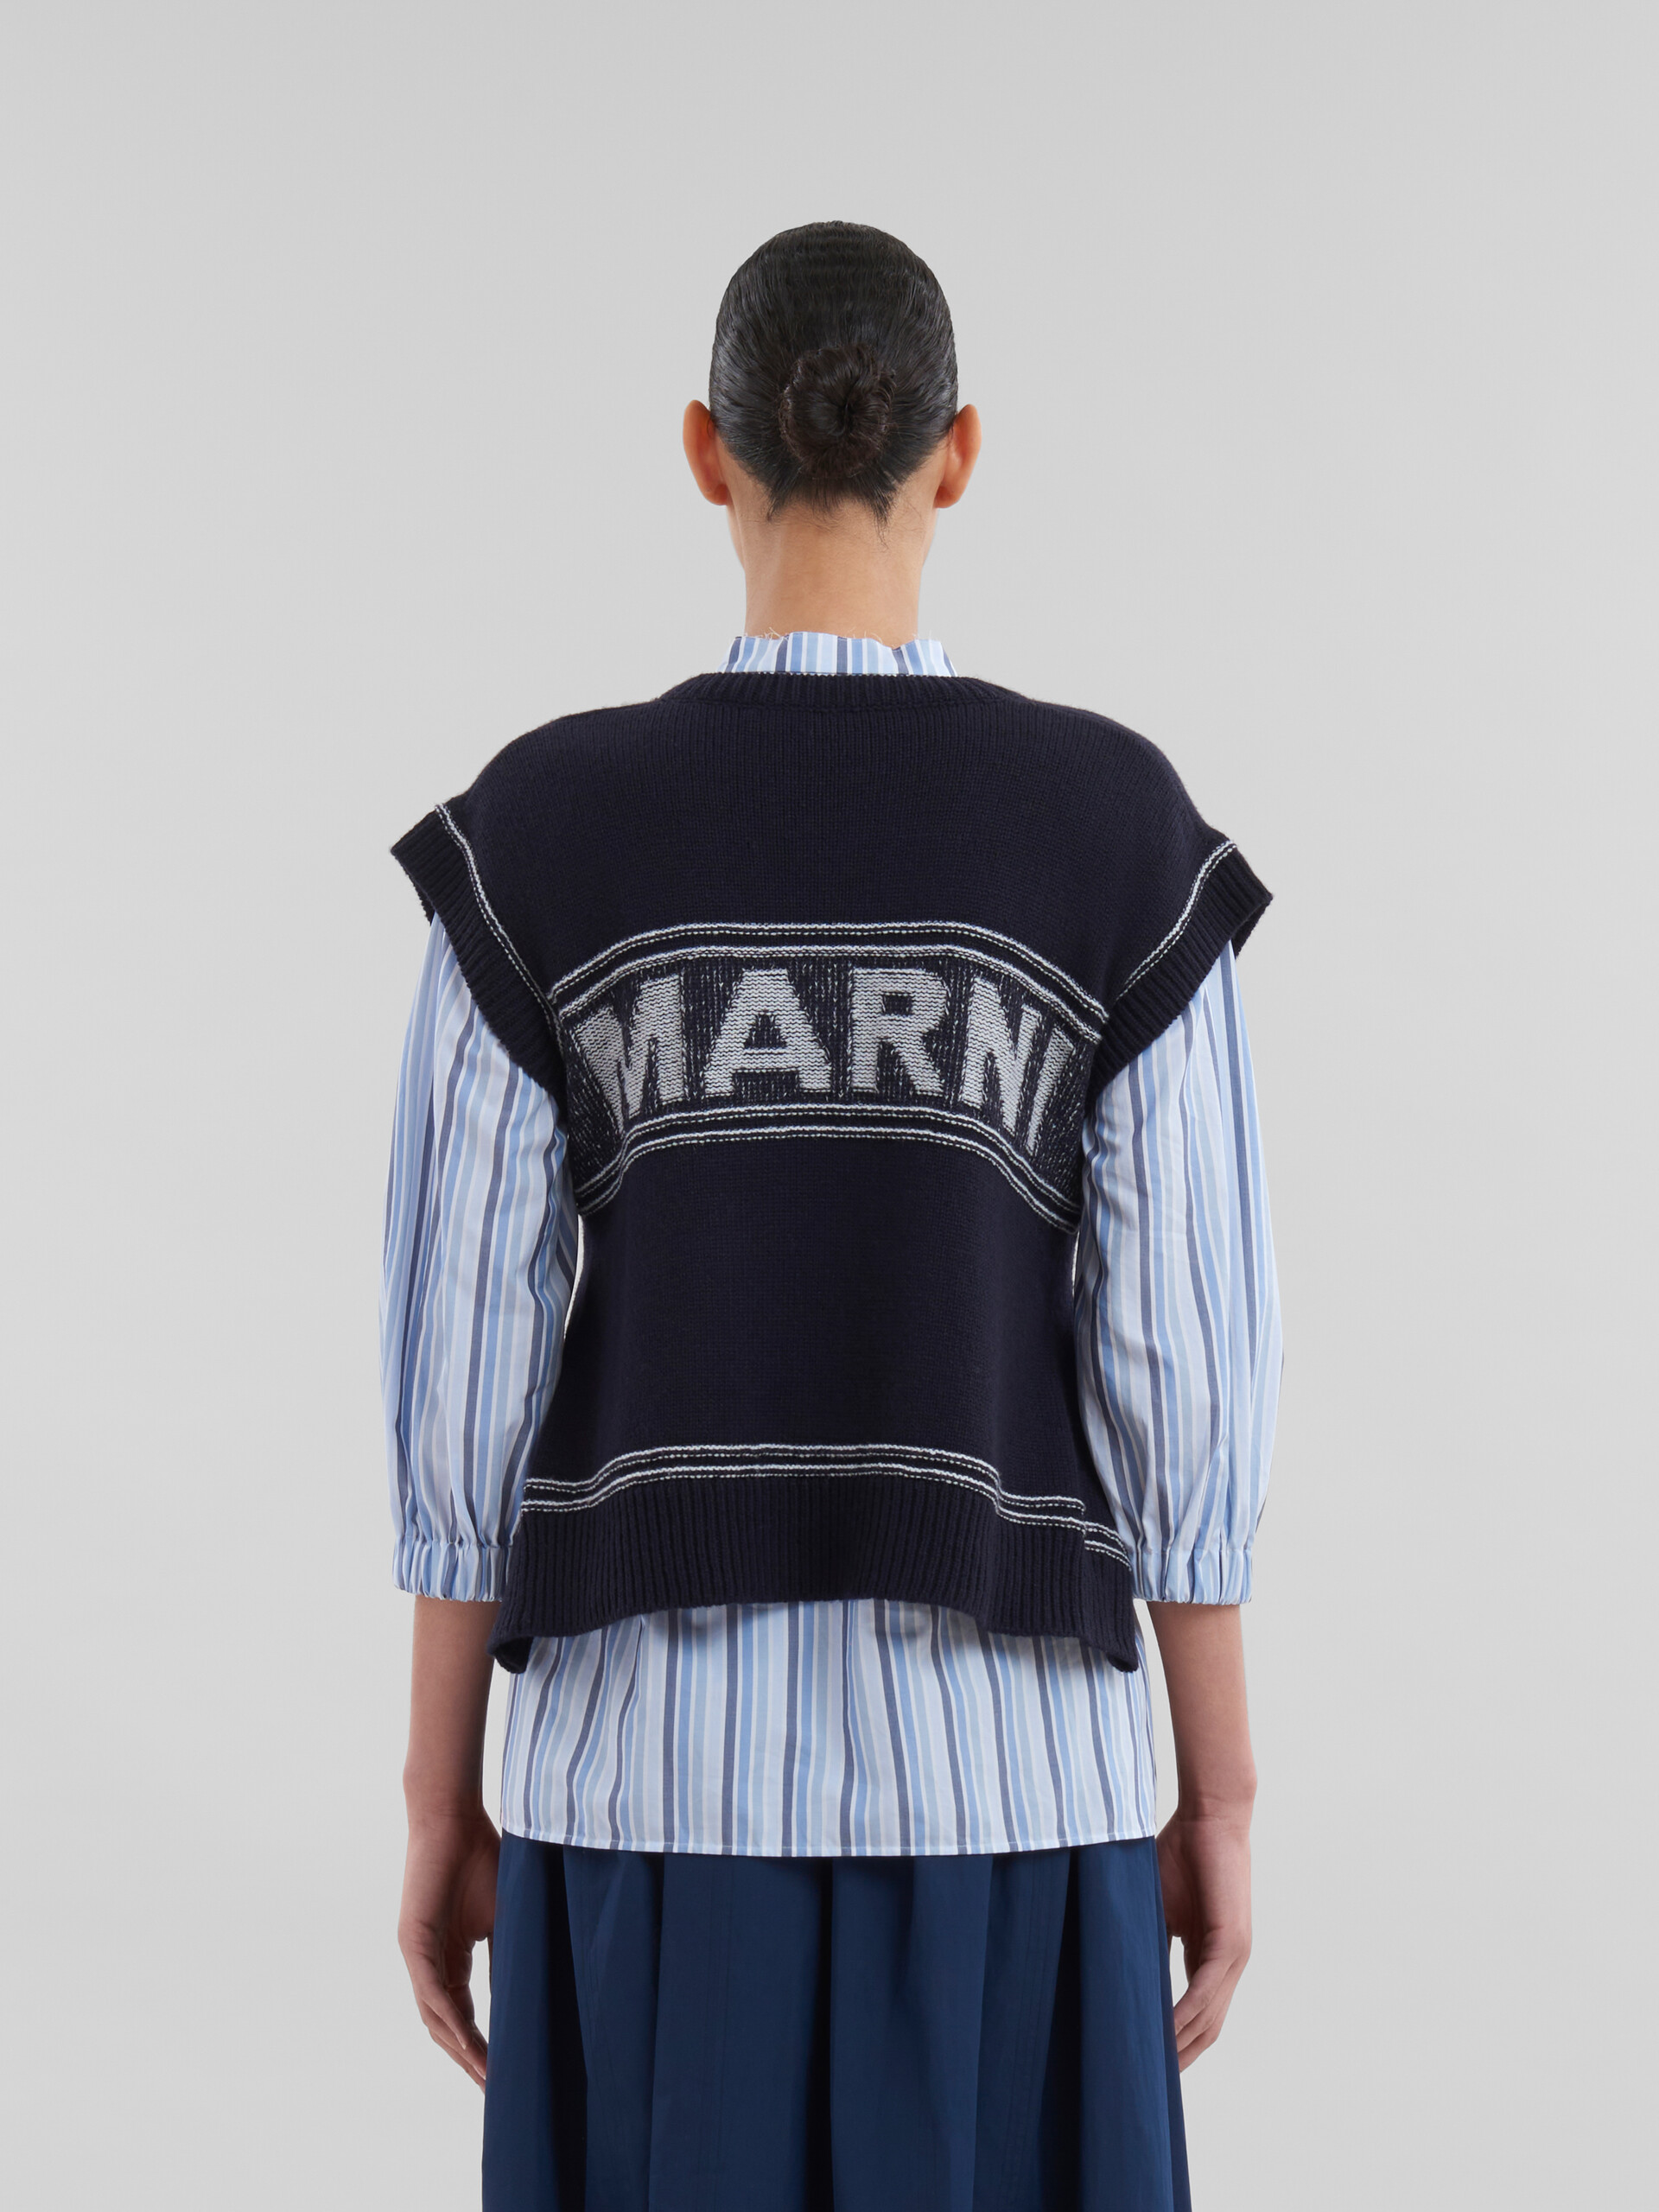 Gilet in lana vergine navy con intarsio Marni - Pullover - Image 3